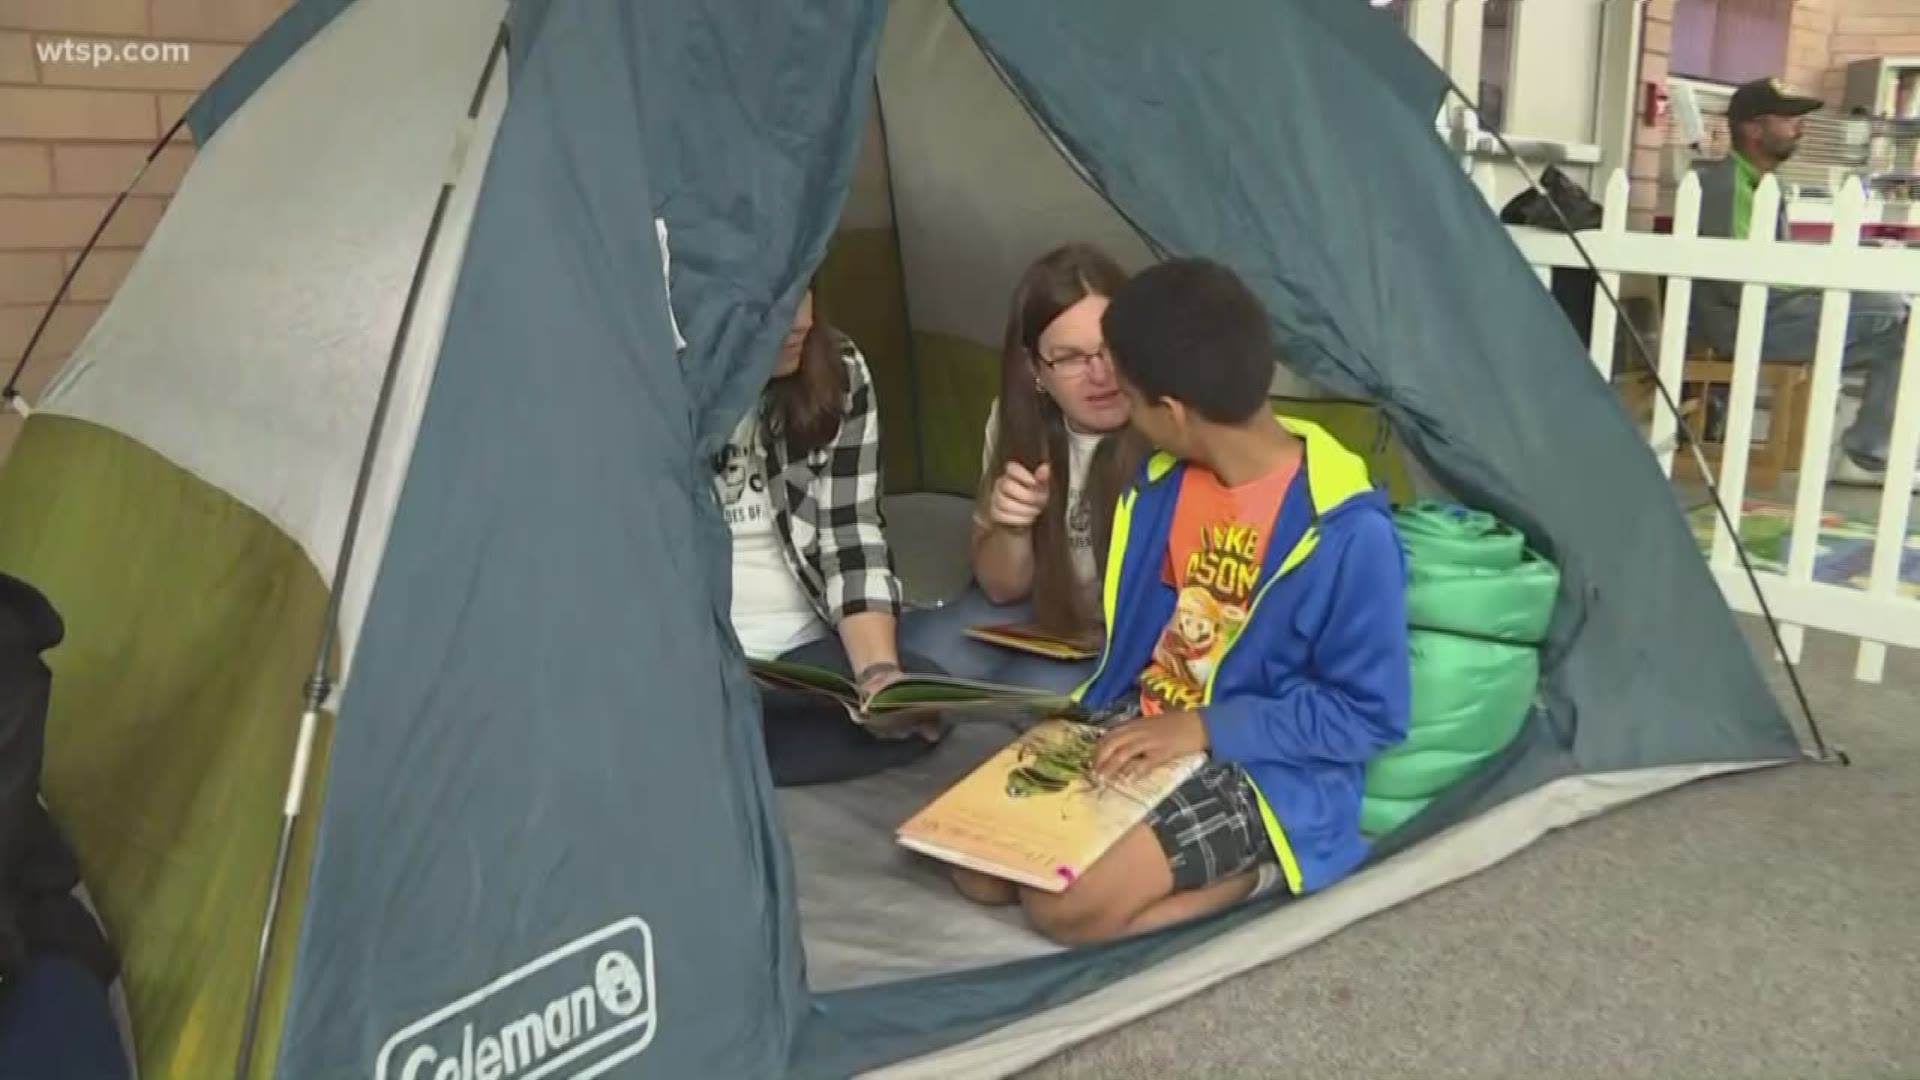 The tents help Fox Hollow Elementary students learn. https://on.wtsp.com/2J9jrGi